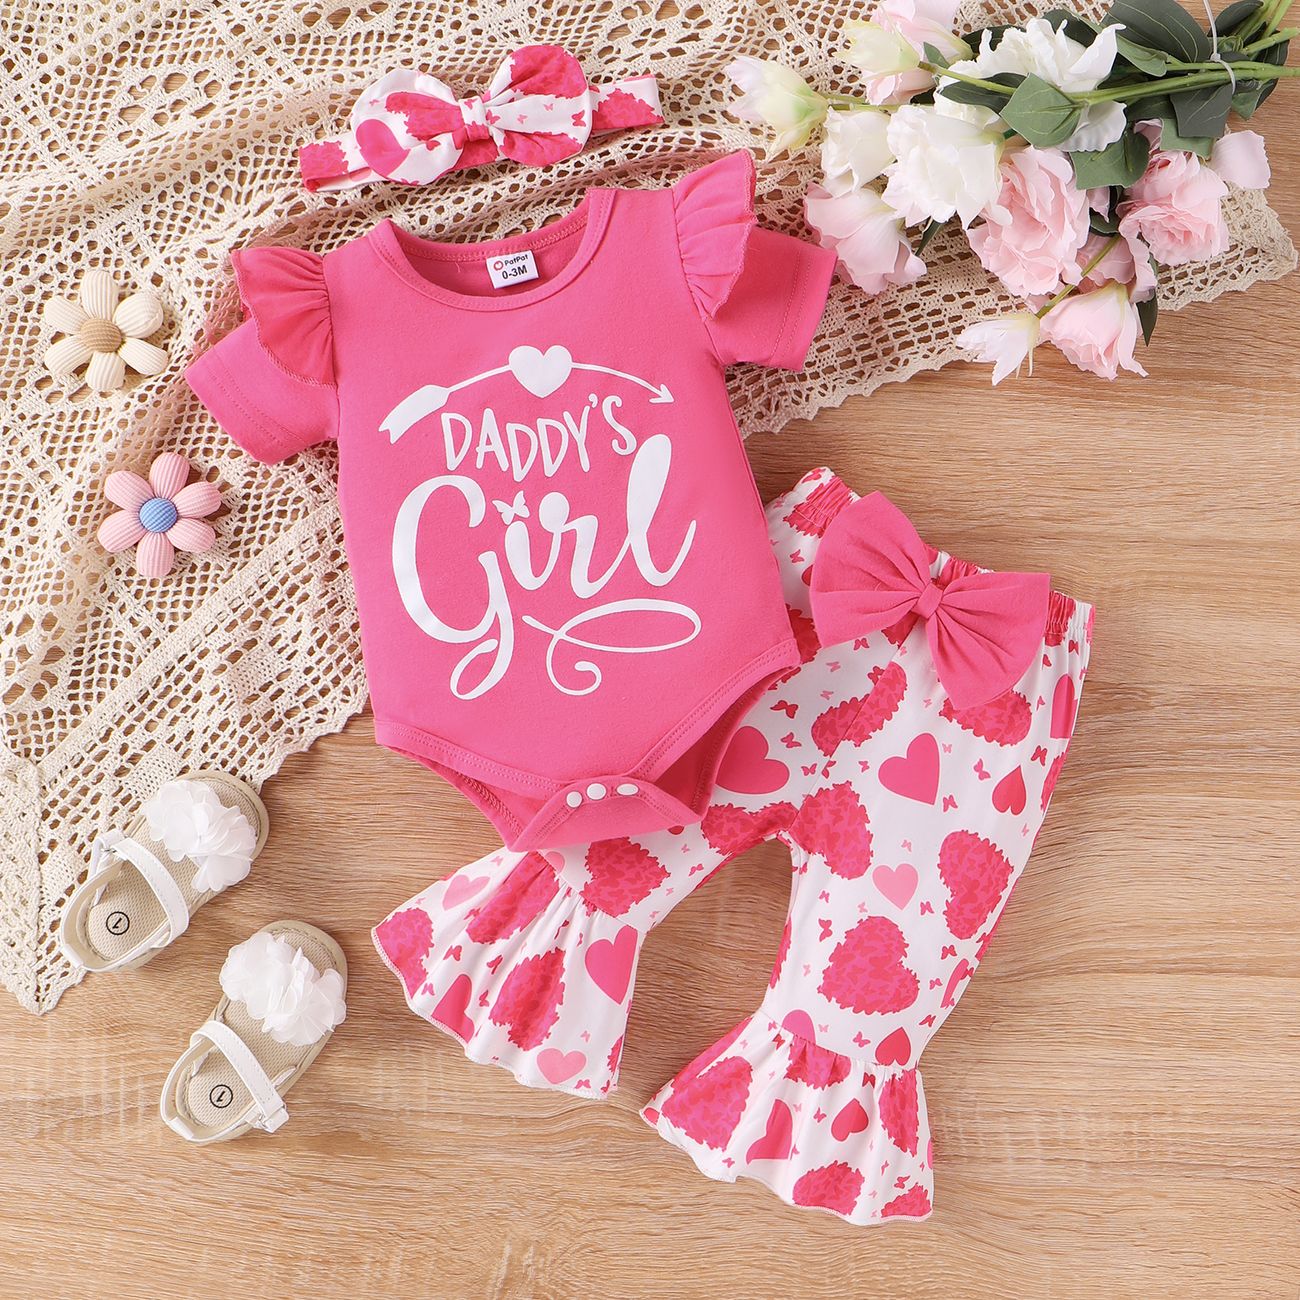 Buy Baby Gear & Maternité Sac maman Clothes Online for Sale - PatPat US  Mobile